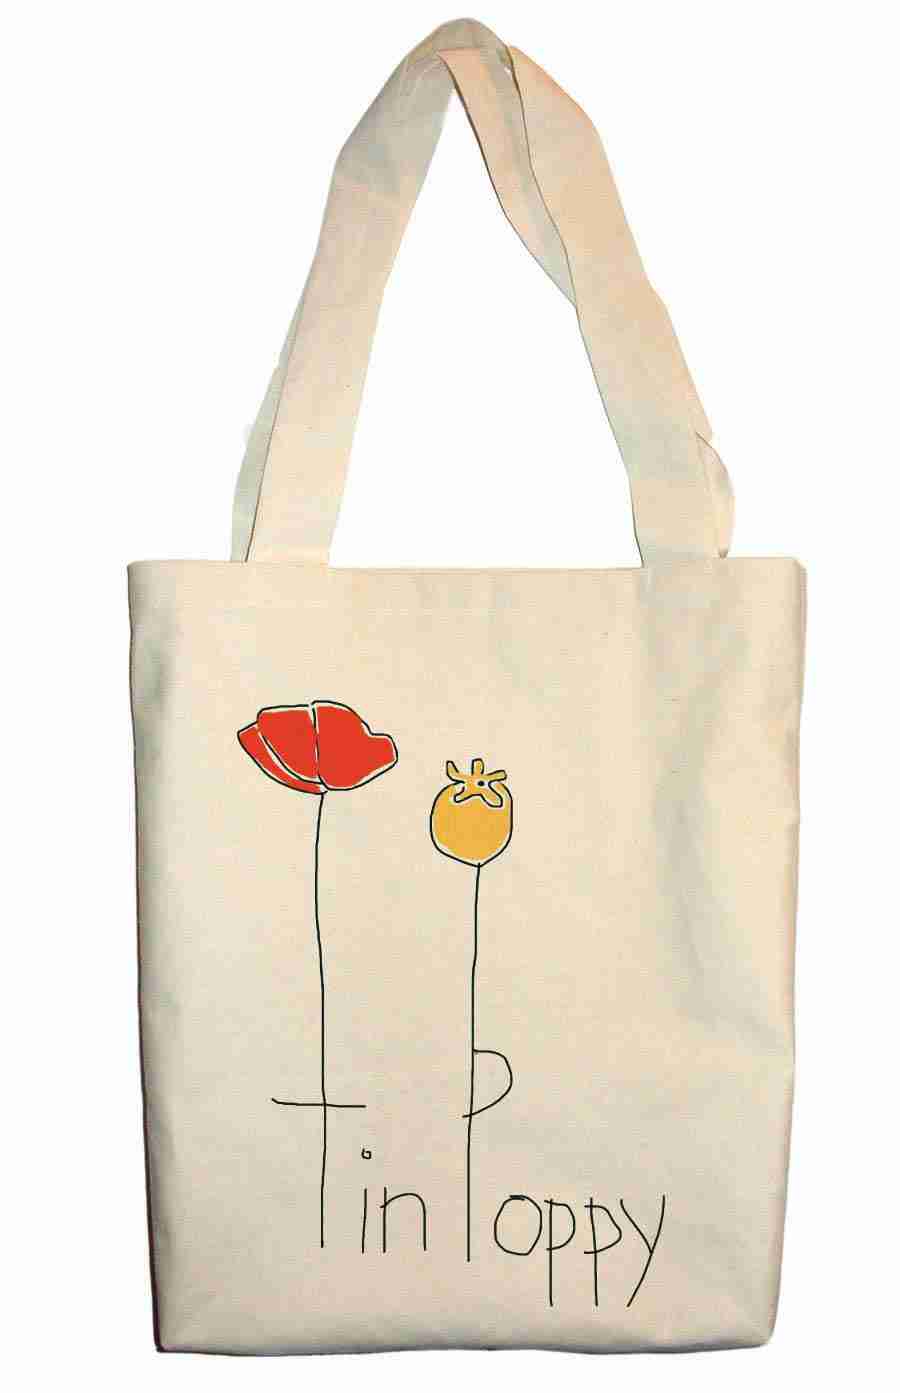 Tin Poppy Tote Bag